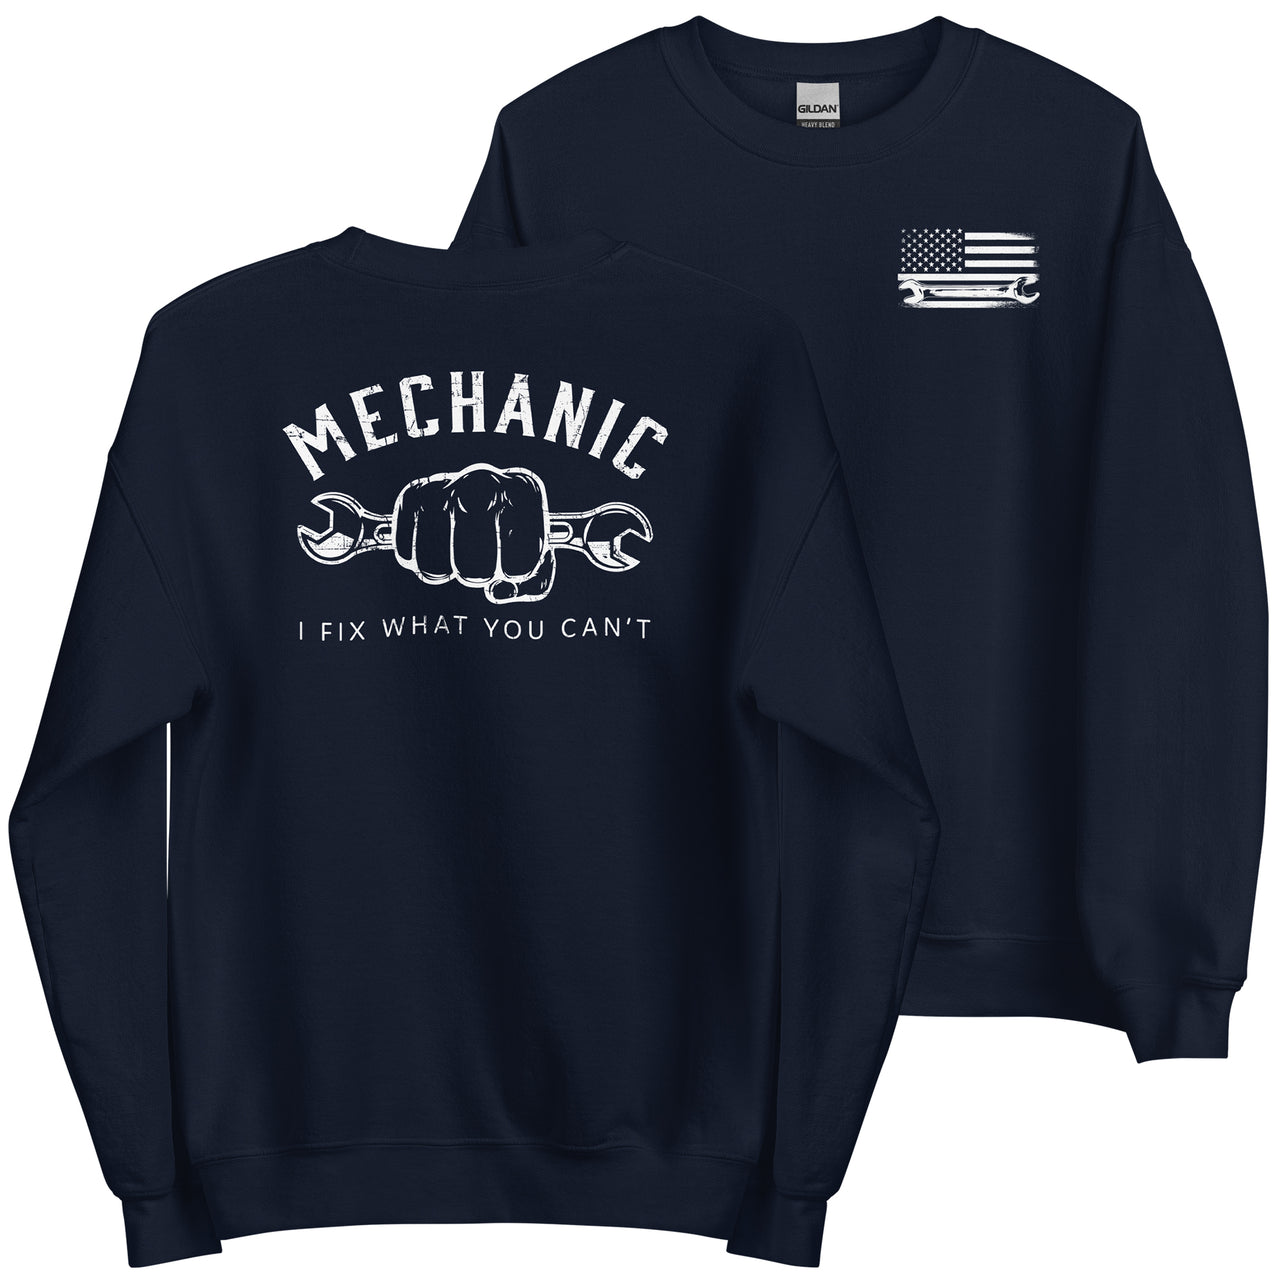 Mechanic Sweatshirt - I Fix What You Cant - Crew Neck - in navy